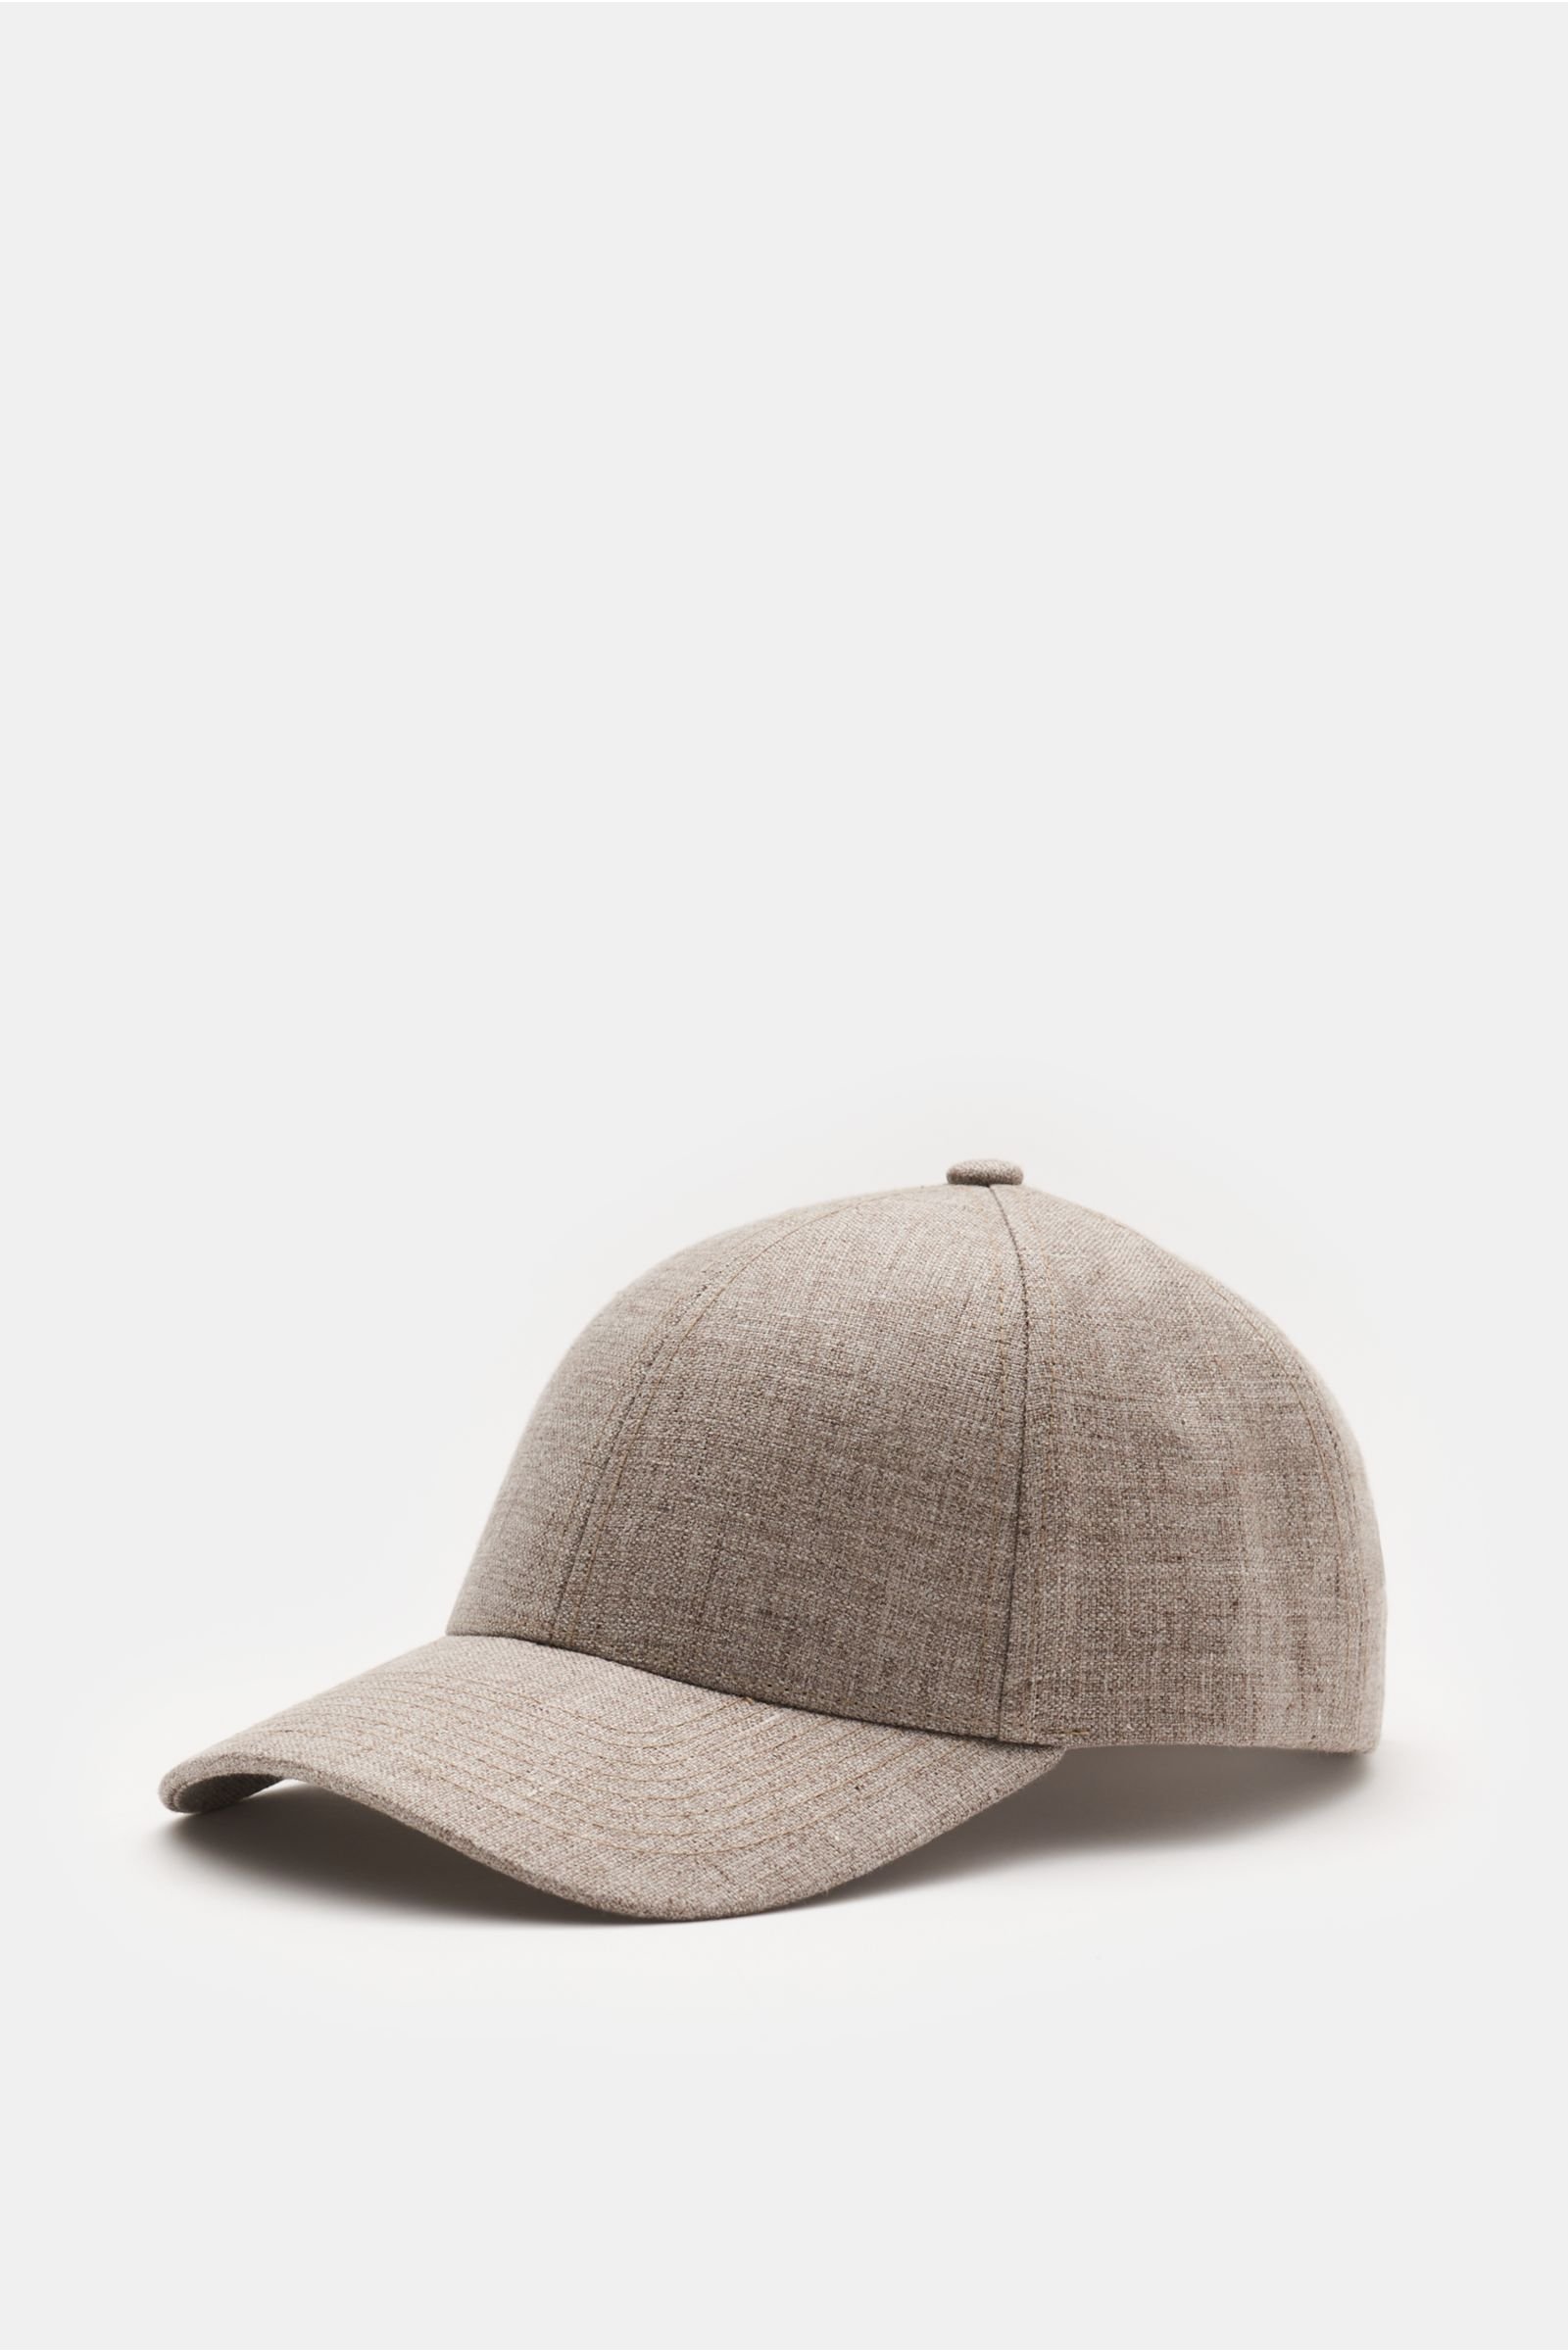 Linen baseball cap grey-brown